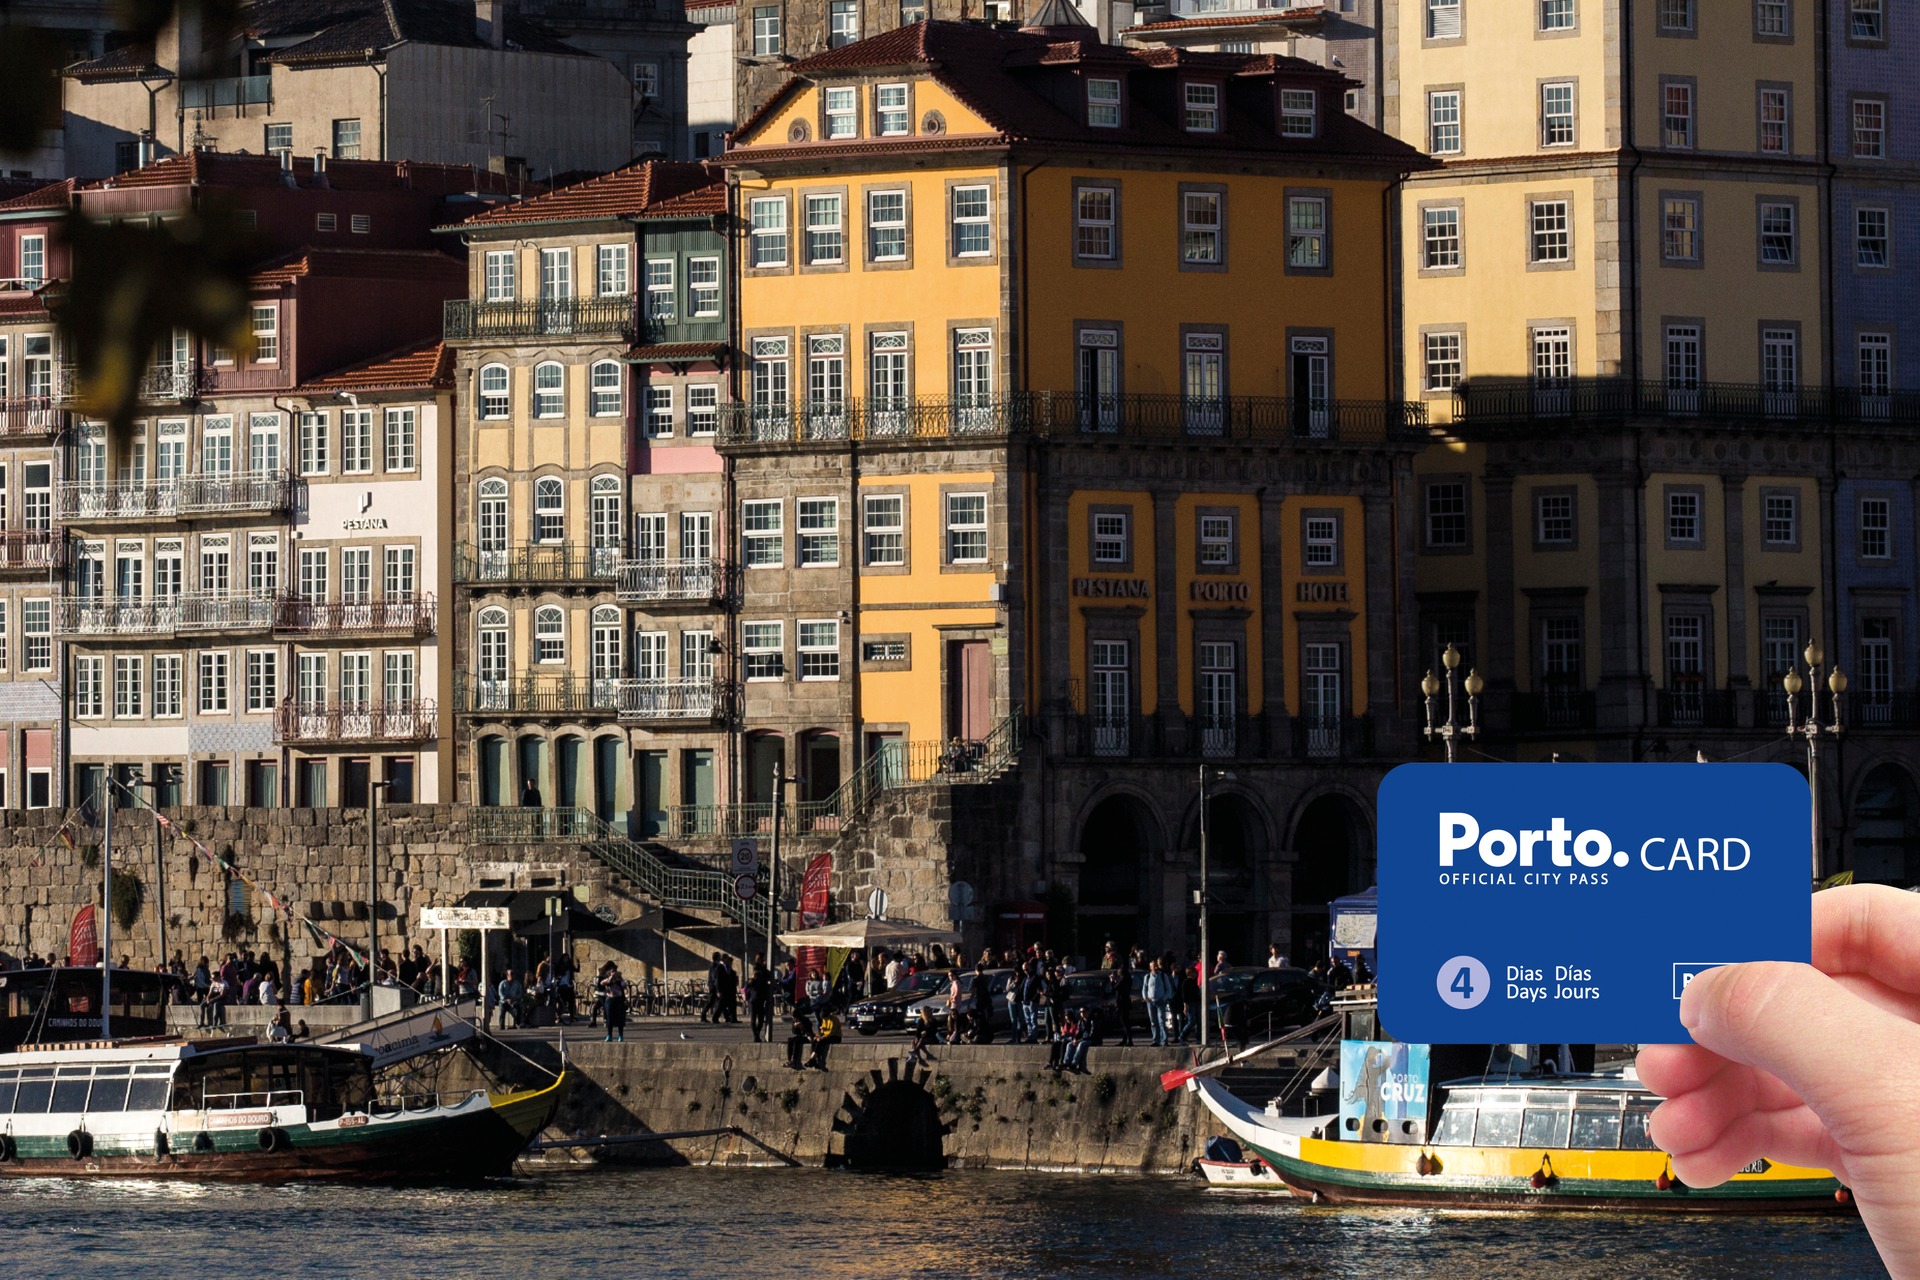 Porto Card